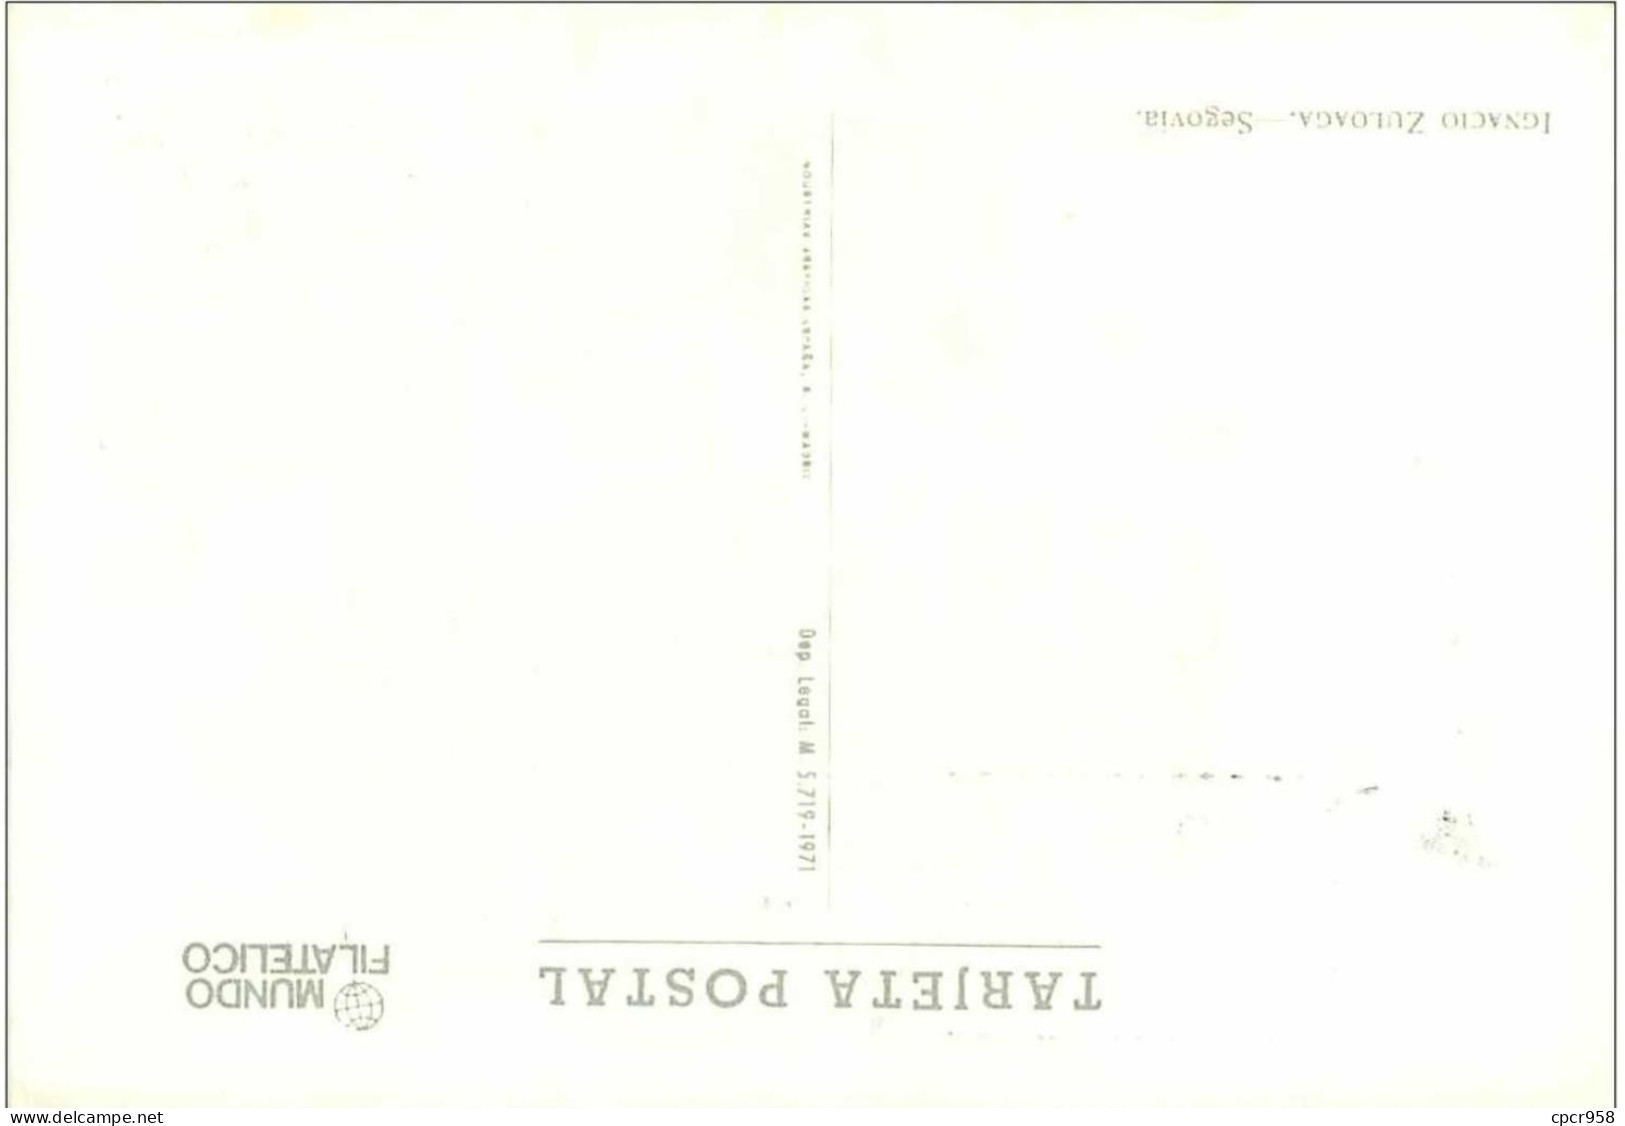 TIMBRES.CARTE MAX.n°9367.ESPAGNE.ZULOAGA.SEGOVIA.1971 - Cartes Maximum